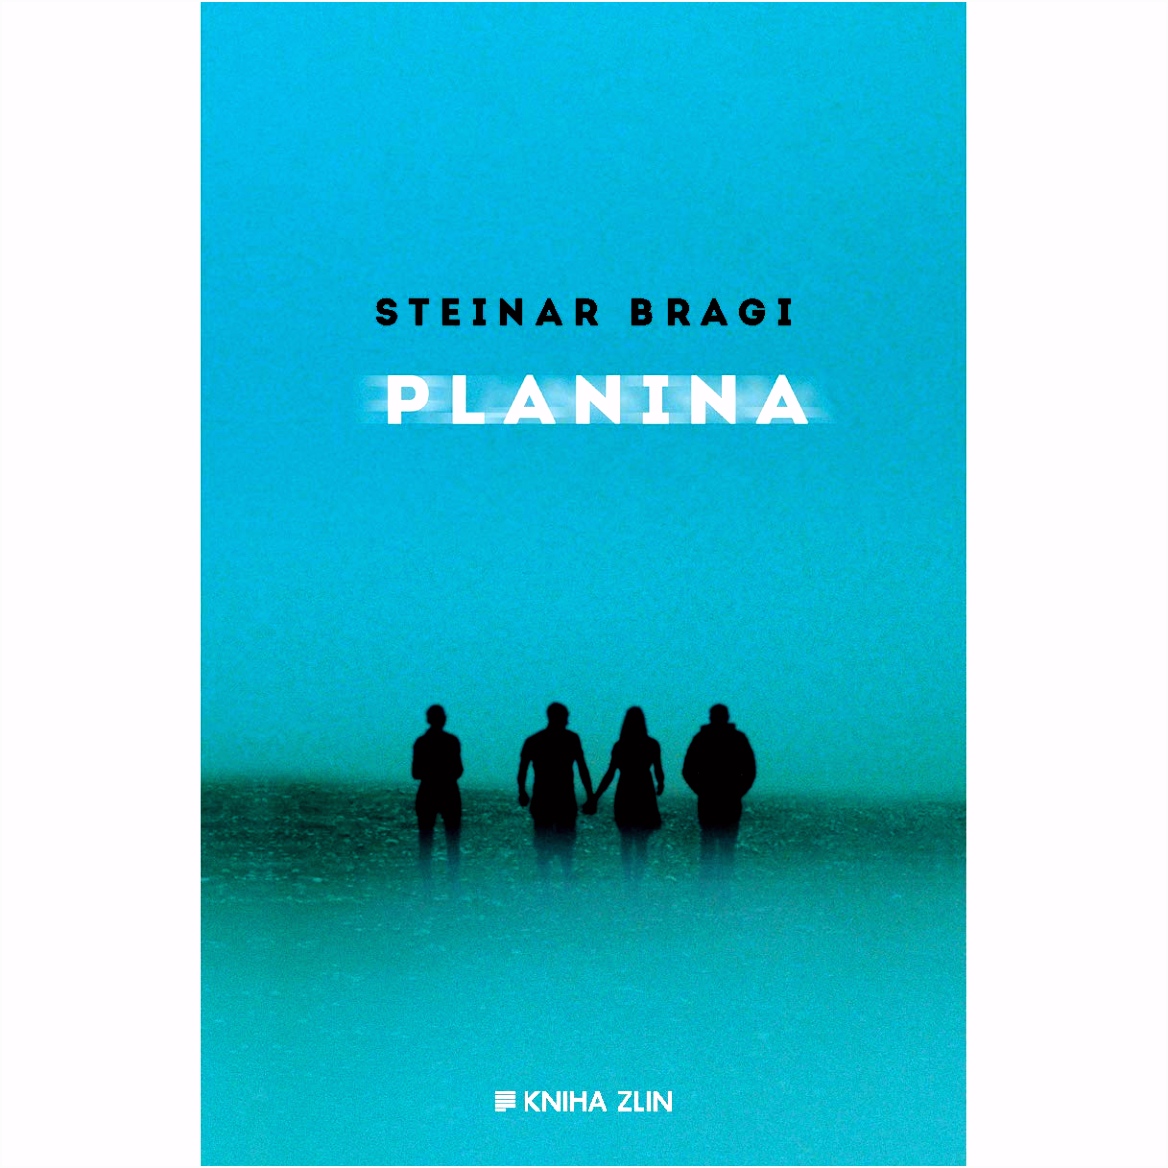 Planina by Steinar Bragi 2 star ratings